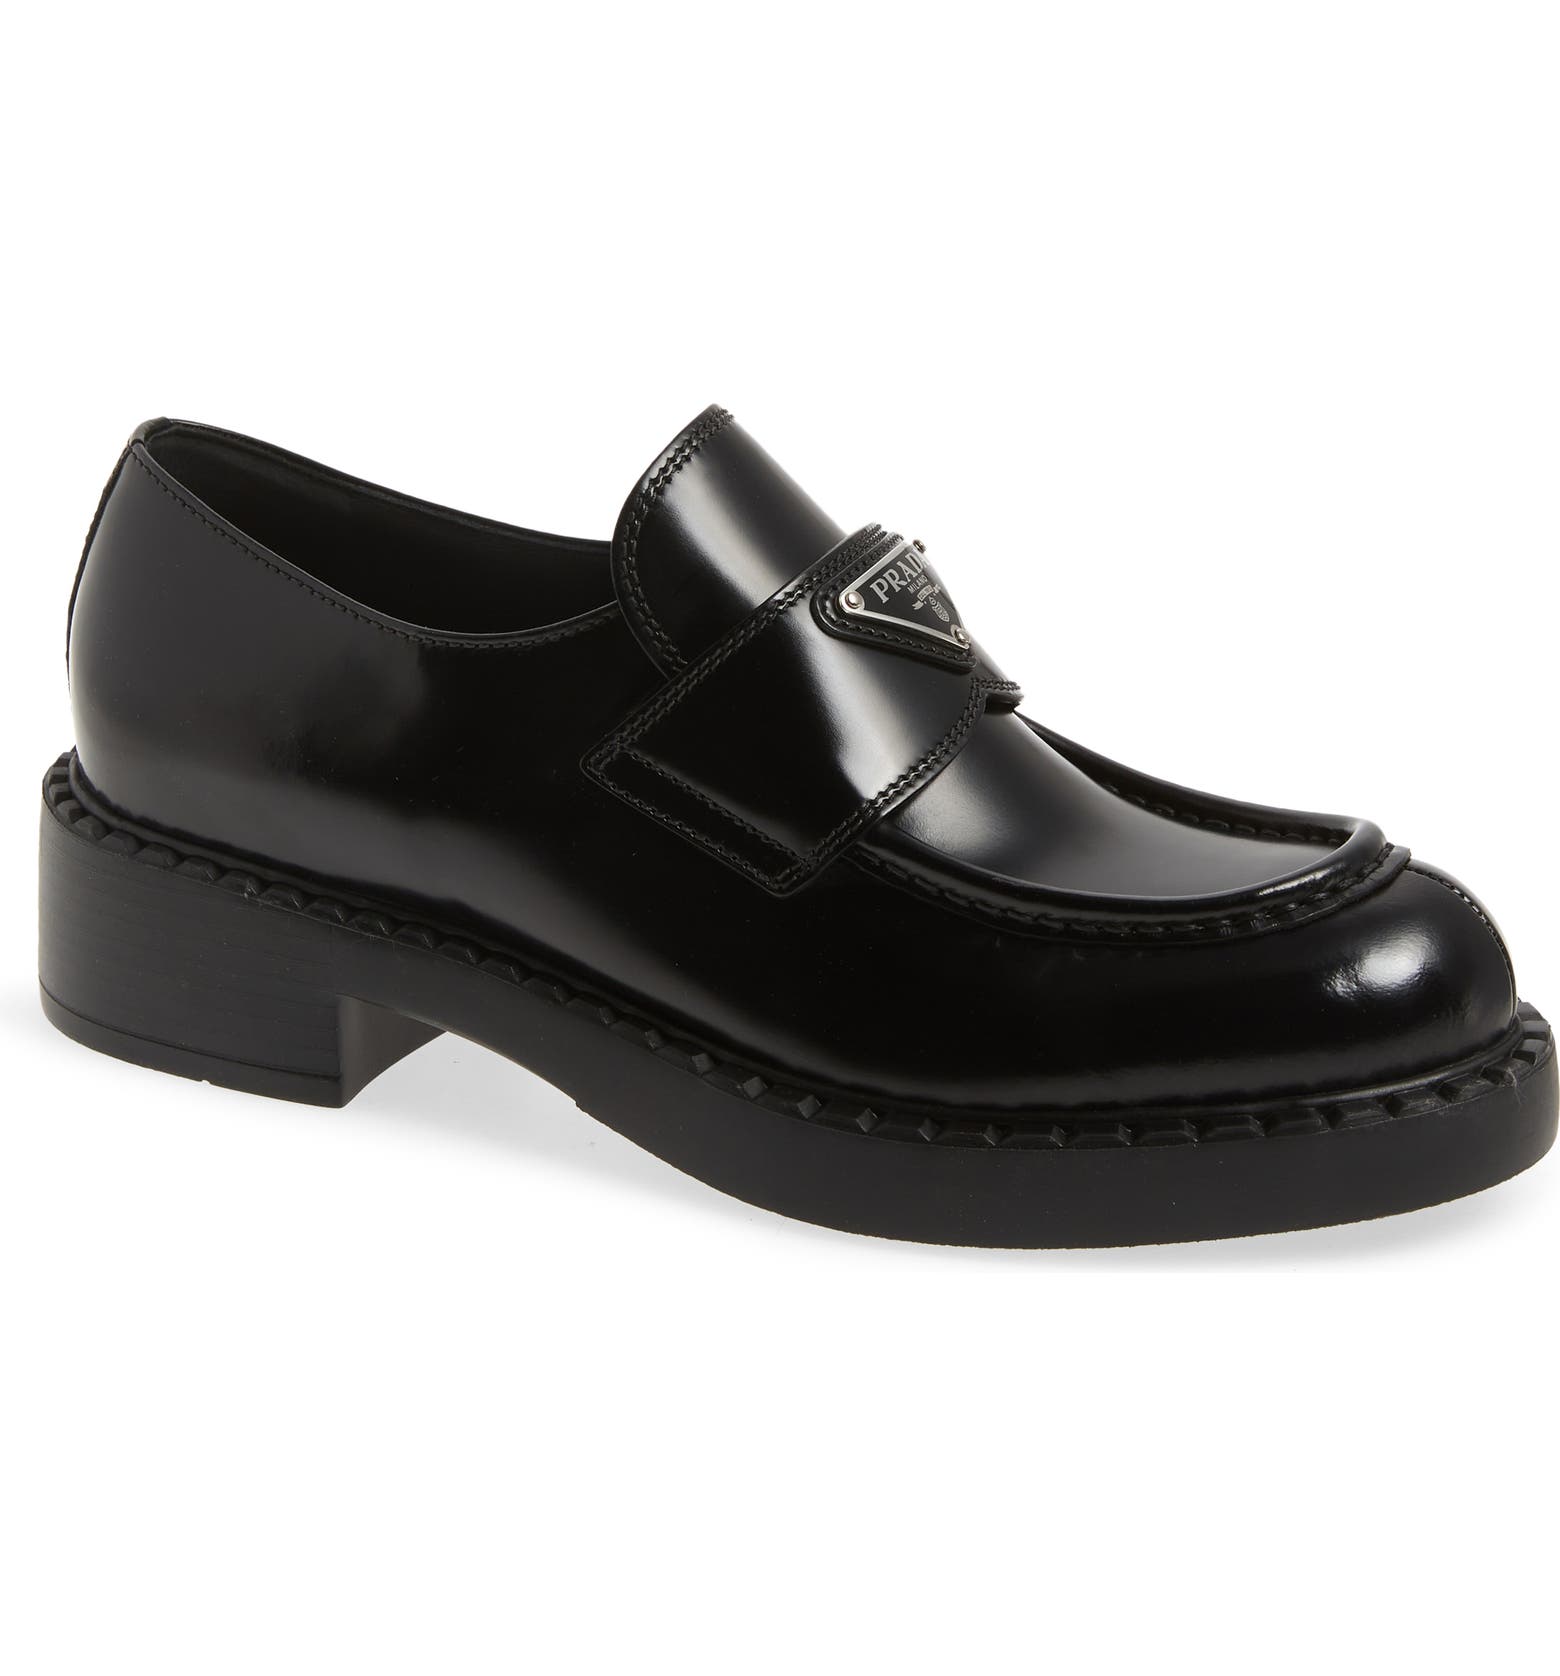 Black Prada loafers